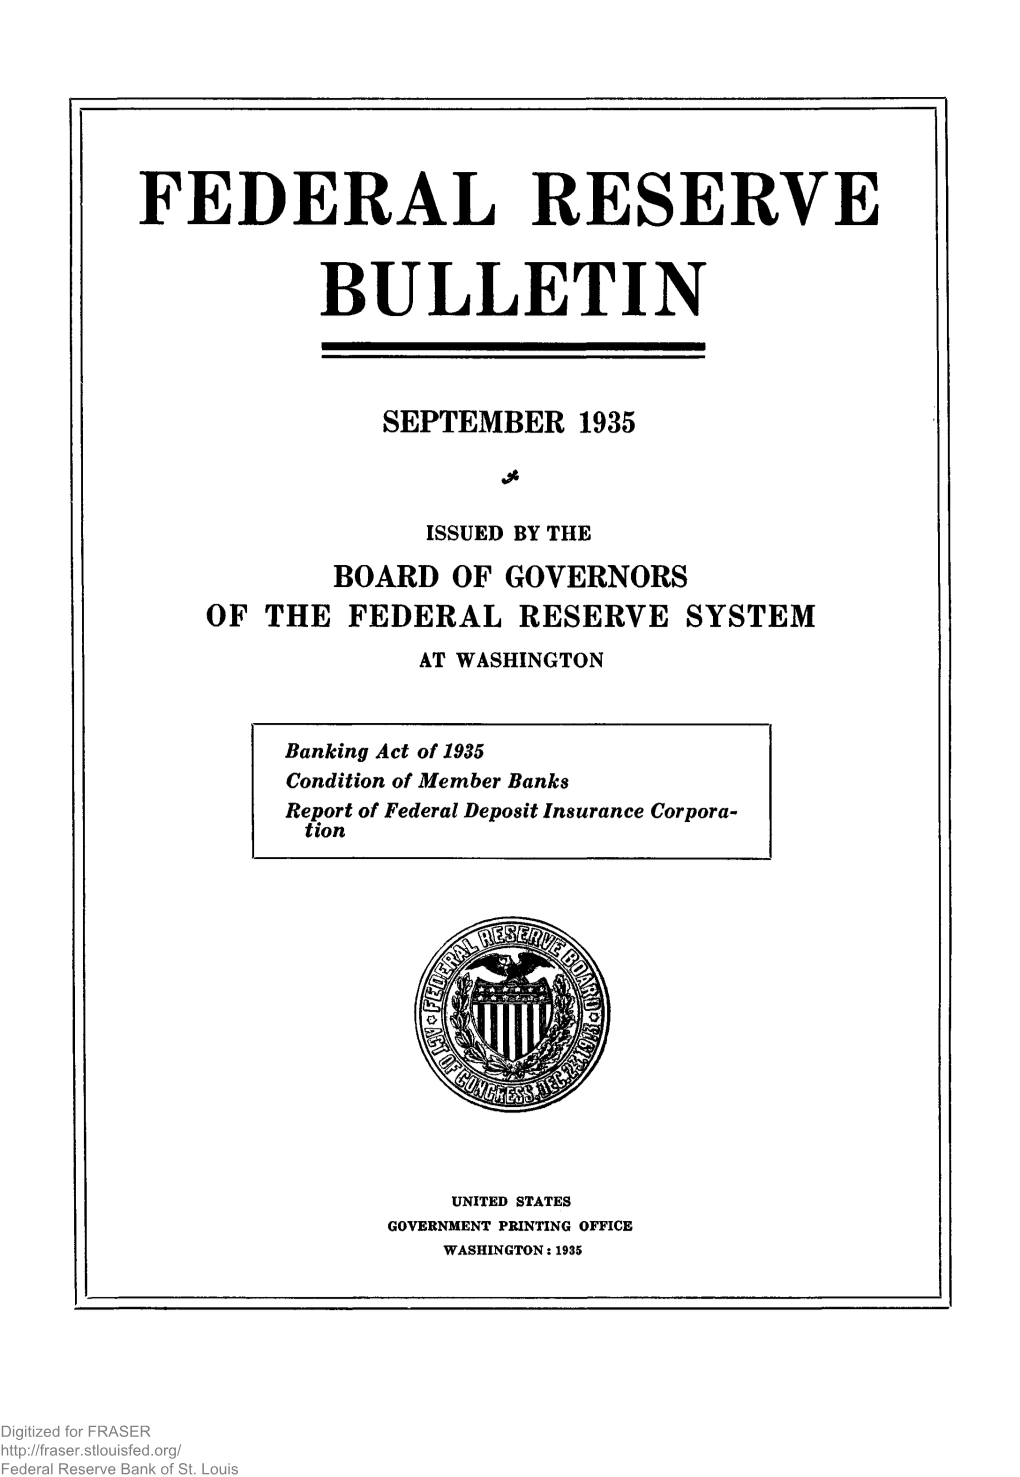 Federal Reserve Bulletin September 1935